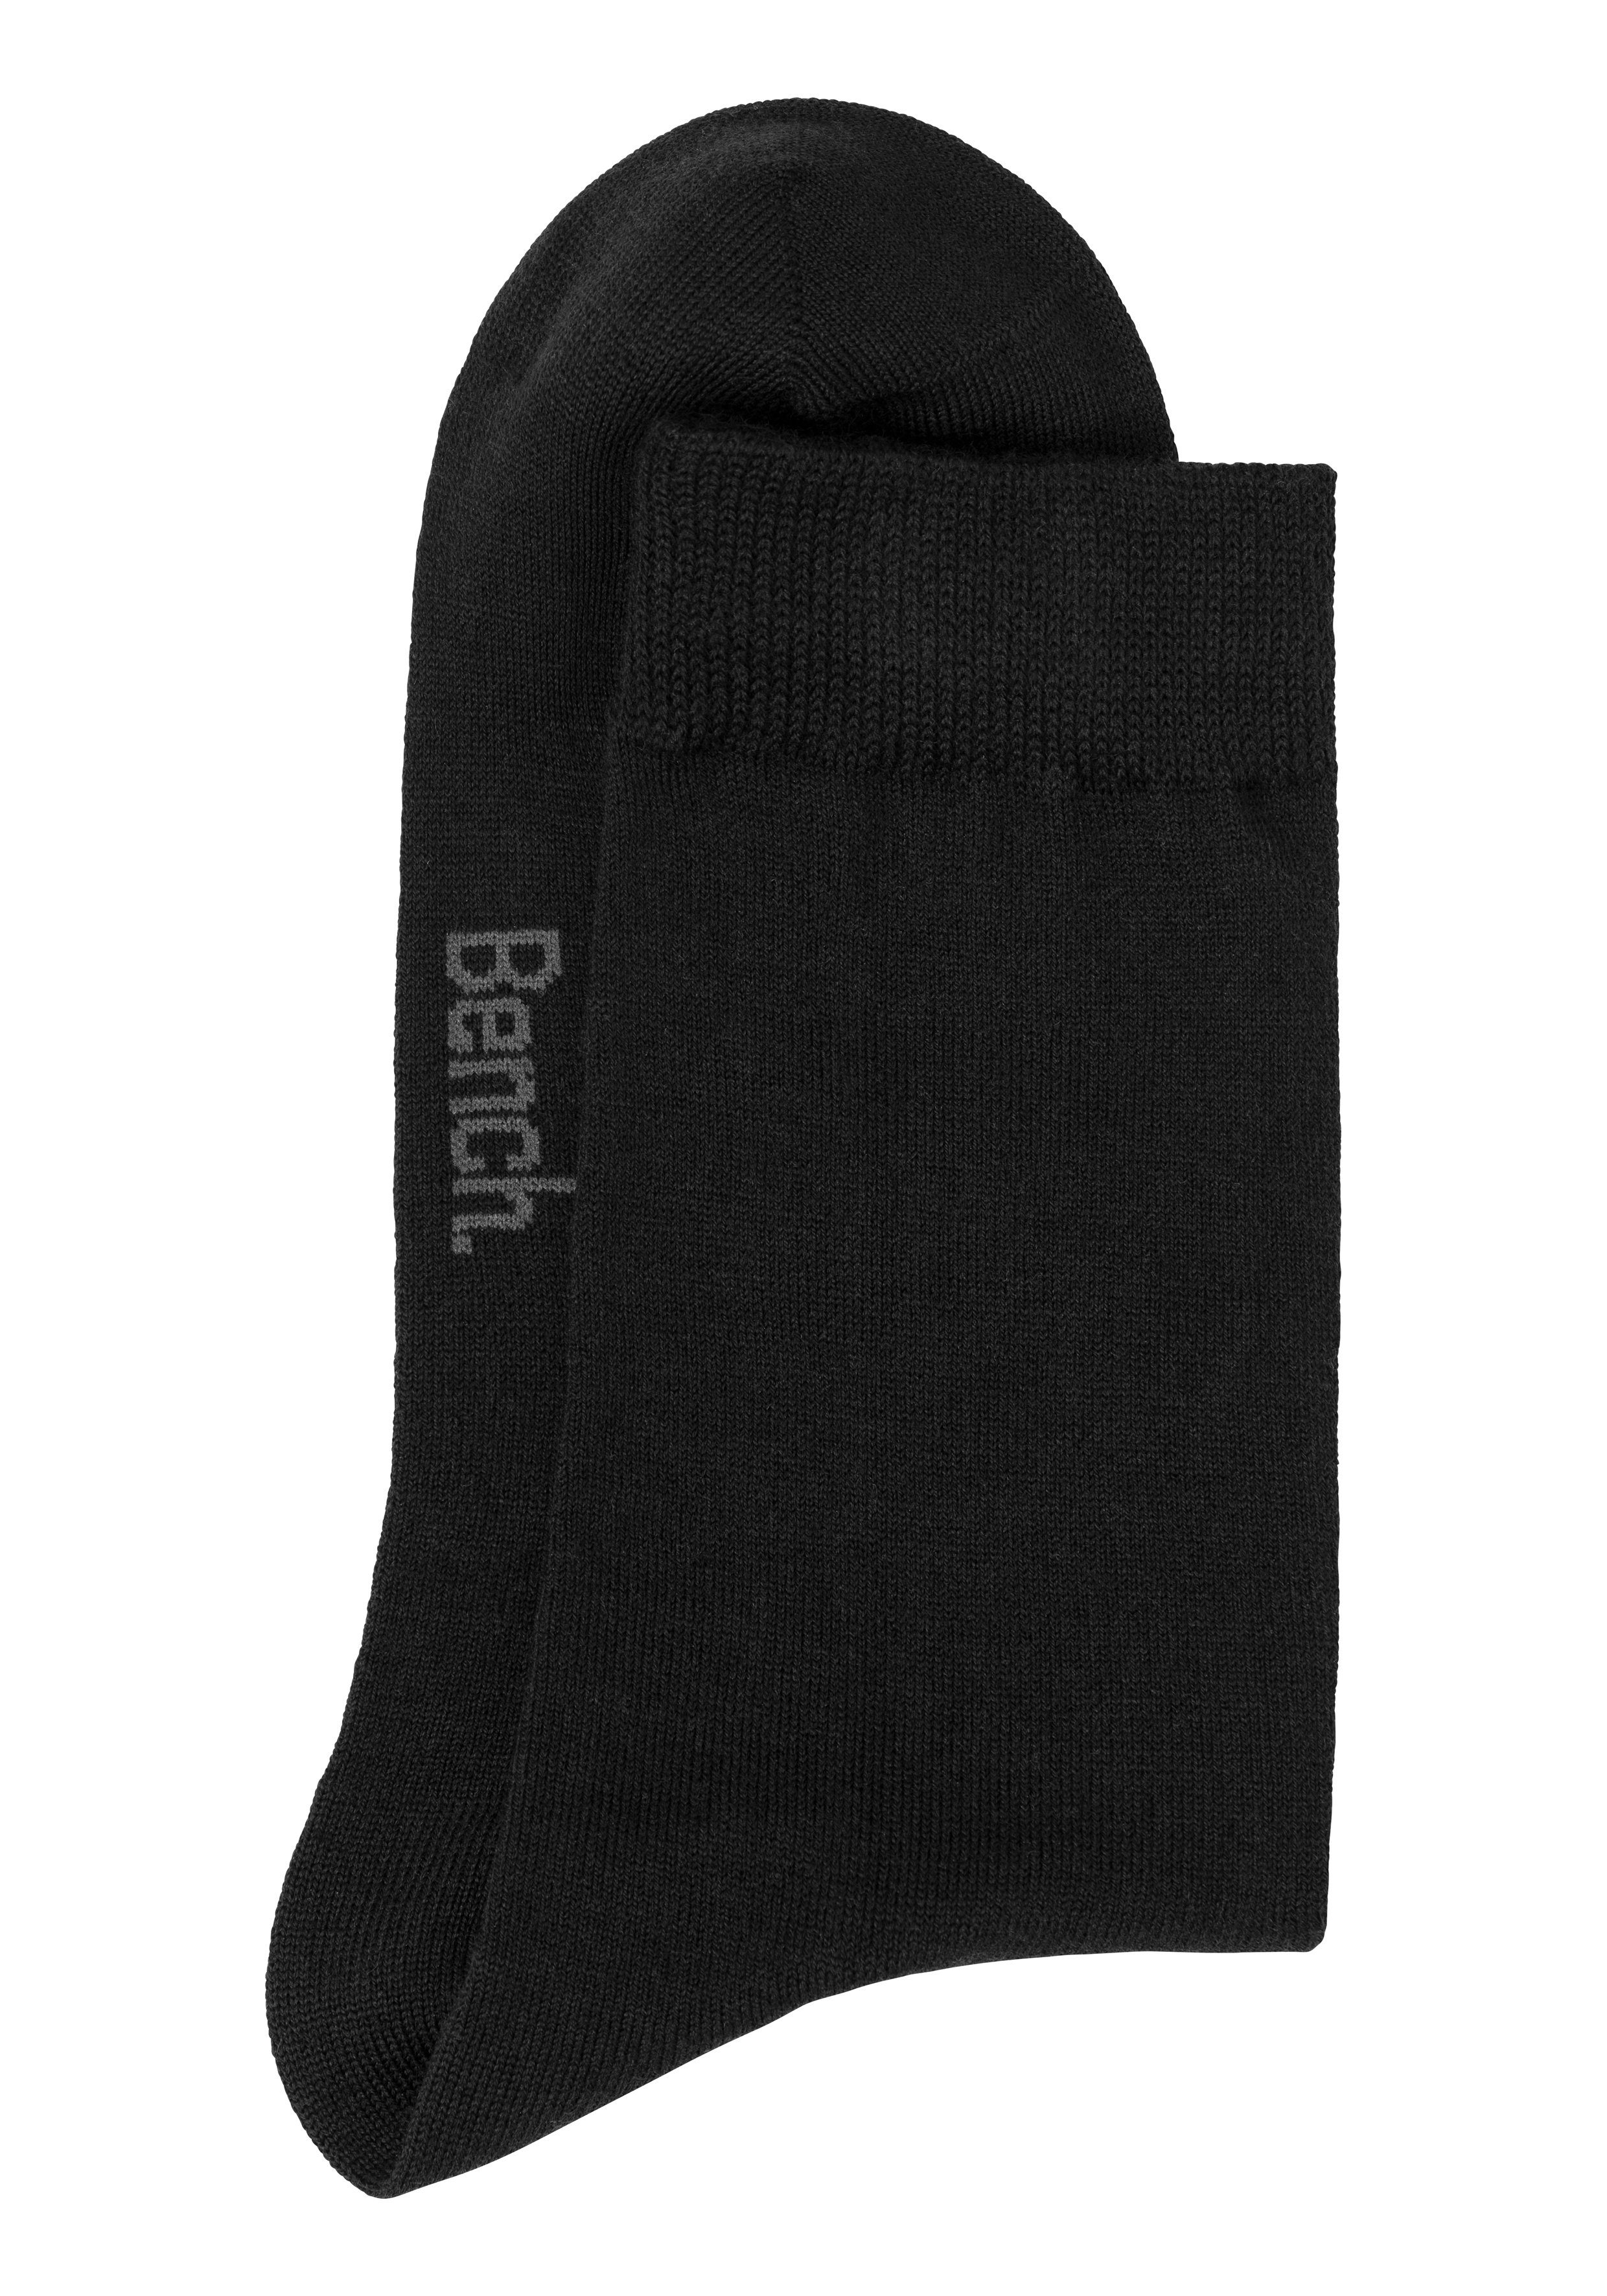 Bench. Socken (3-Paar) Wollsocken aus mit 53% Wolle flauschigem Material